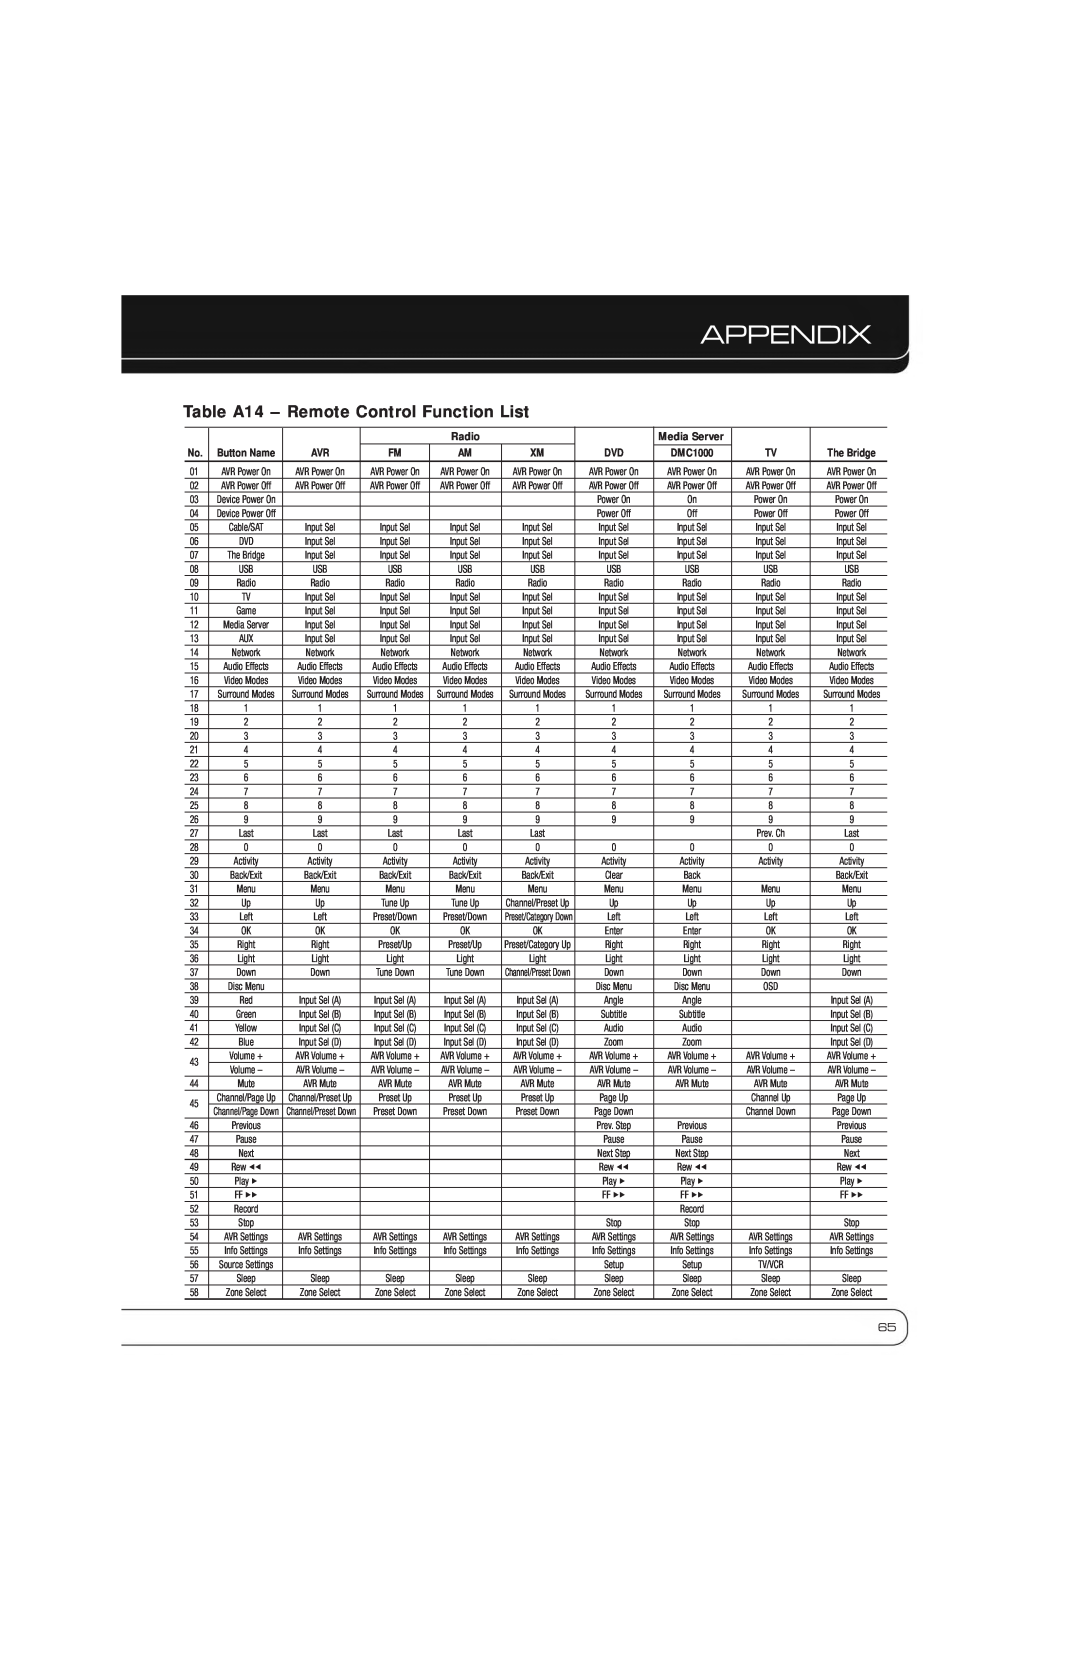 Harman-Kardon AVR 7550HD owner manual Table A14 - Remote Control Function List, Appendix, Radio, Media Server, DMC1000 